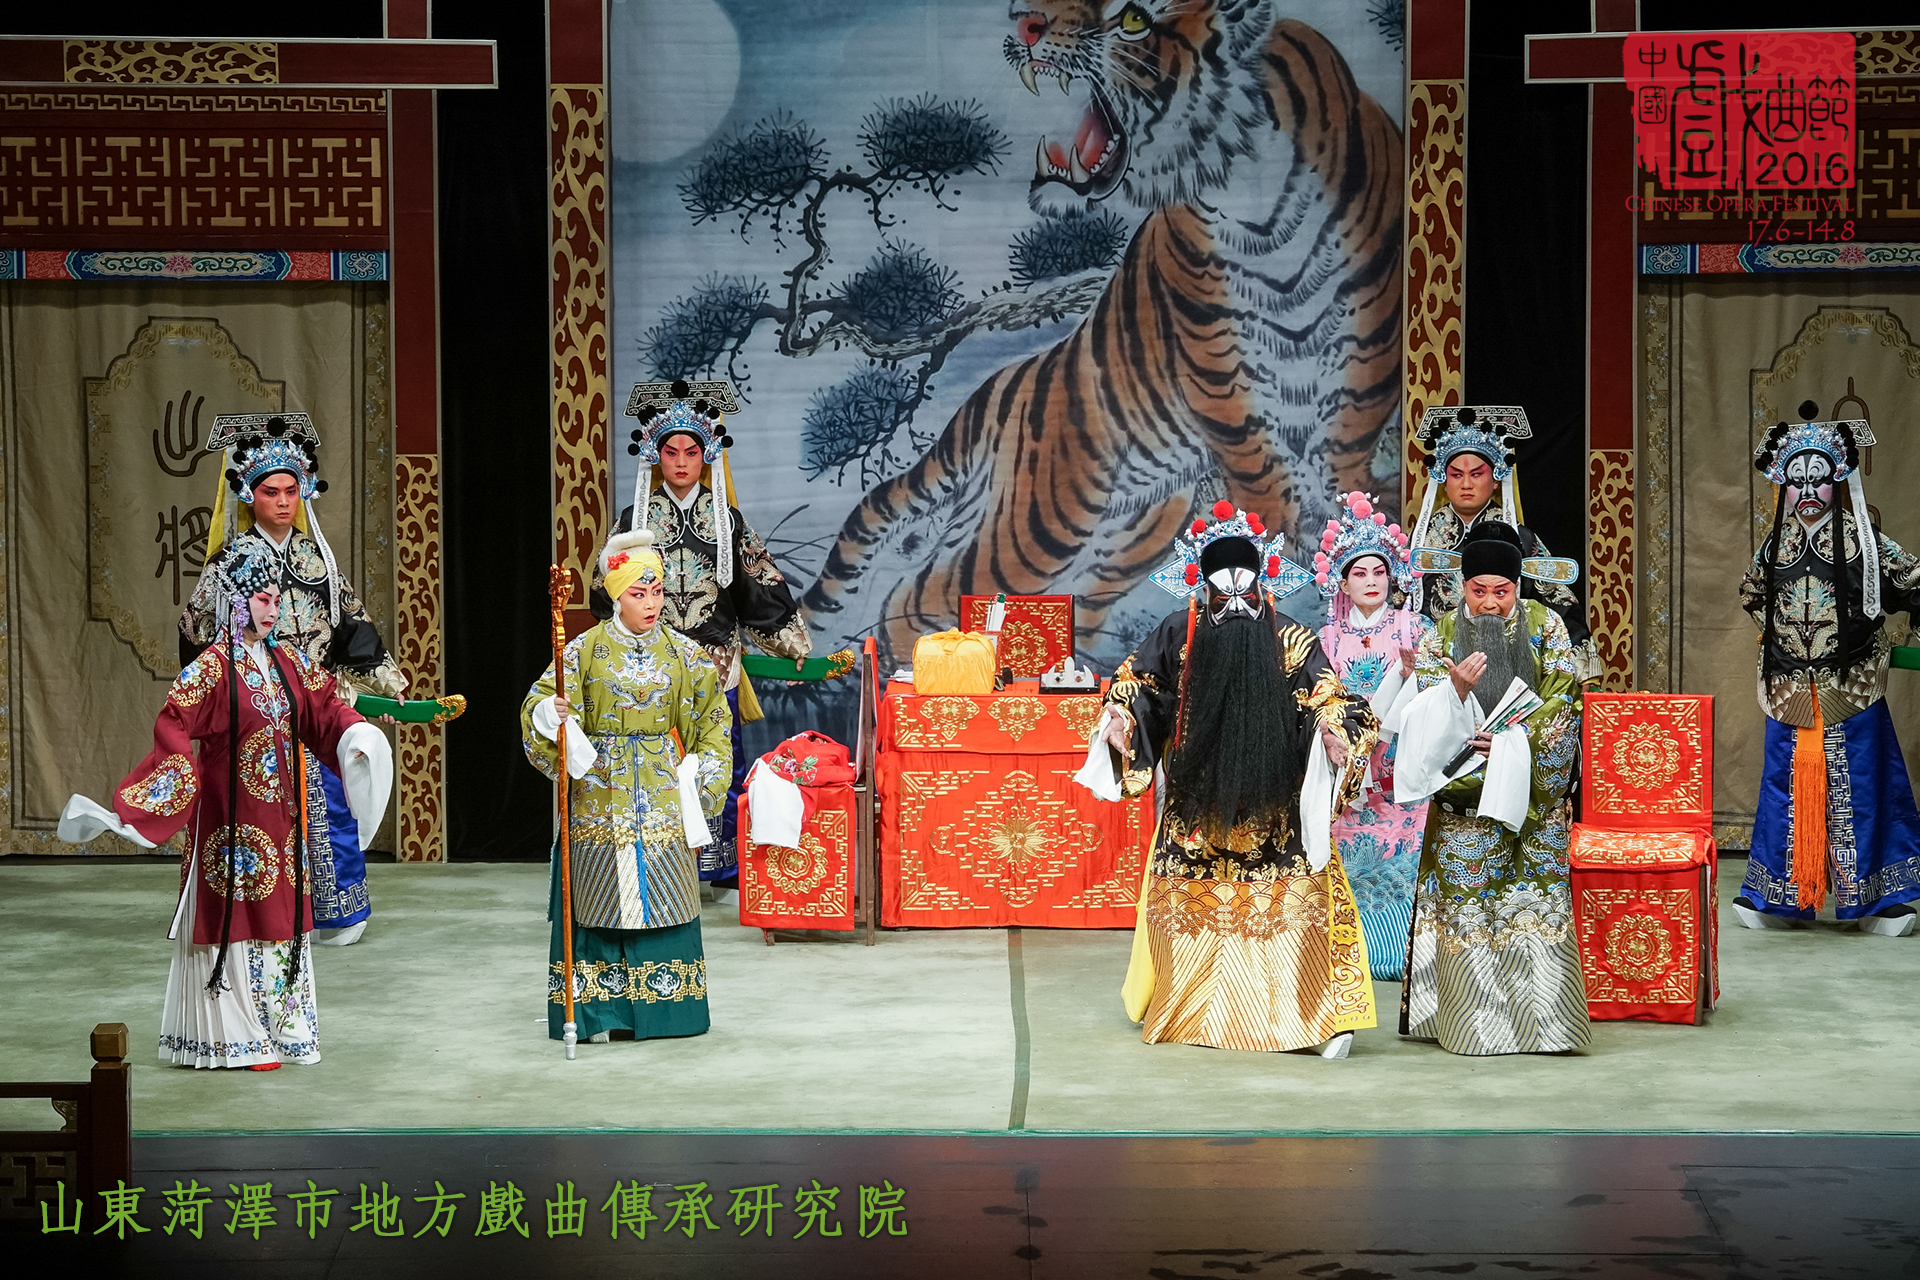 中国戏曲节 2016 Chinese Opera Festival 2016